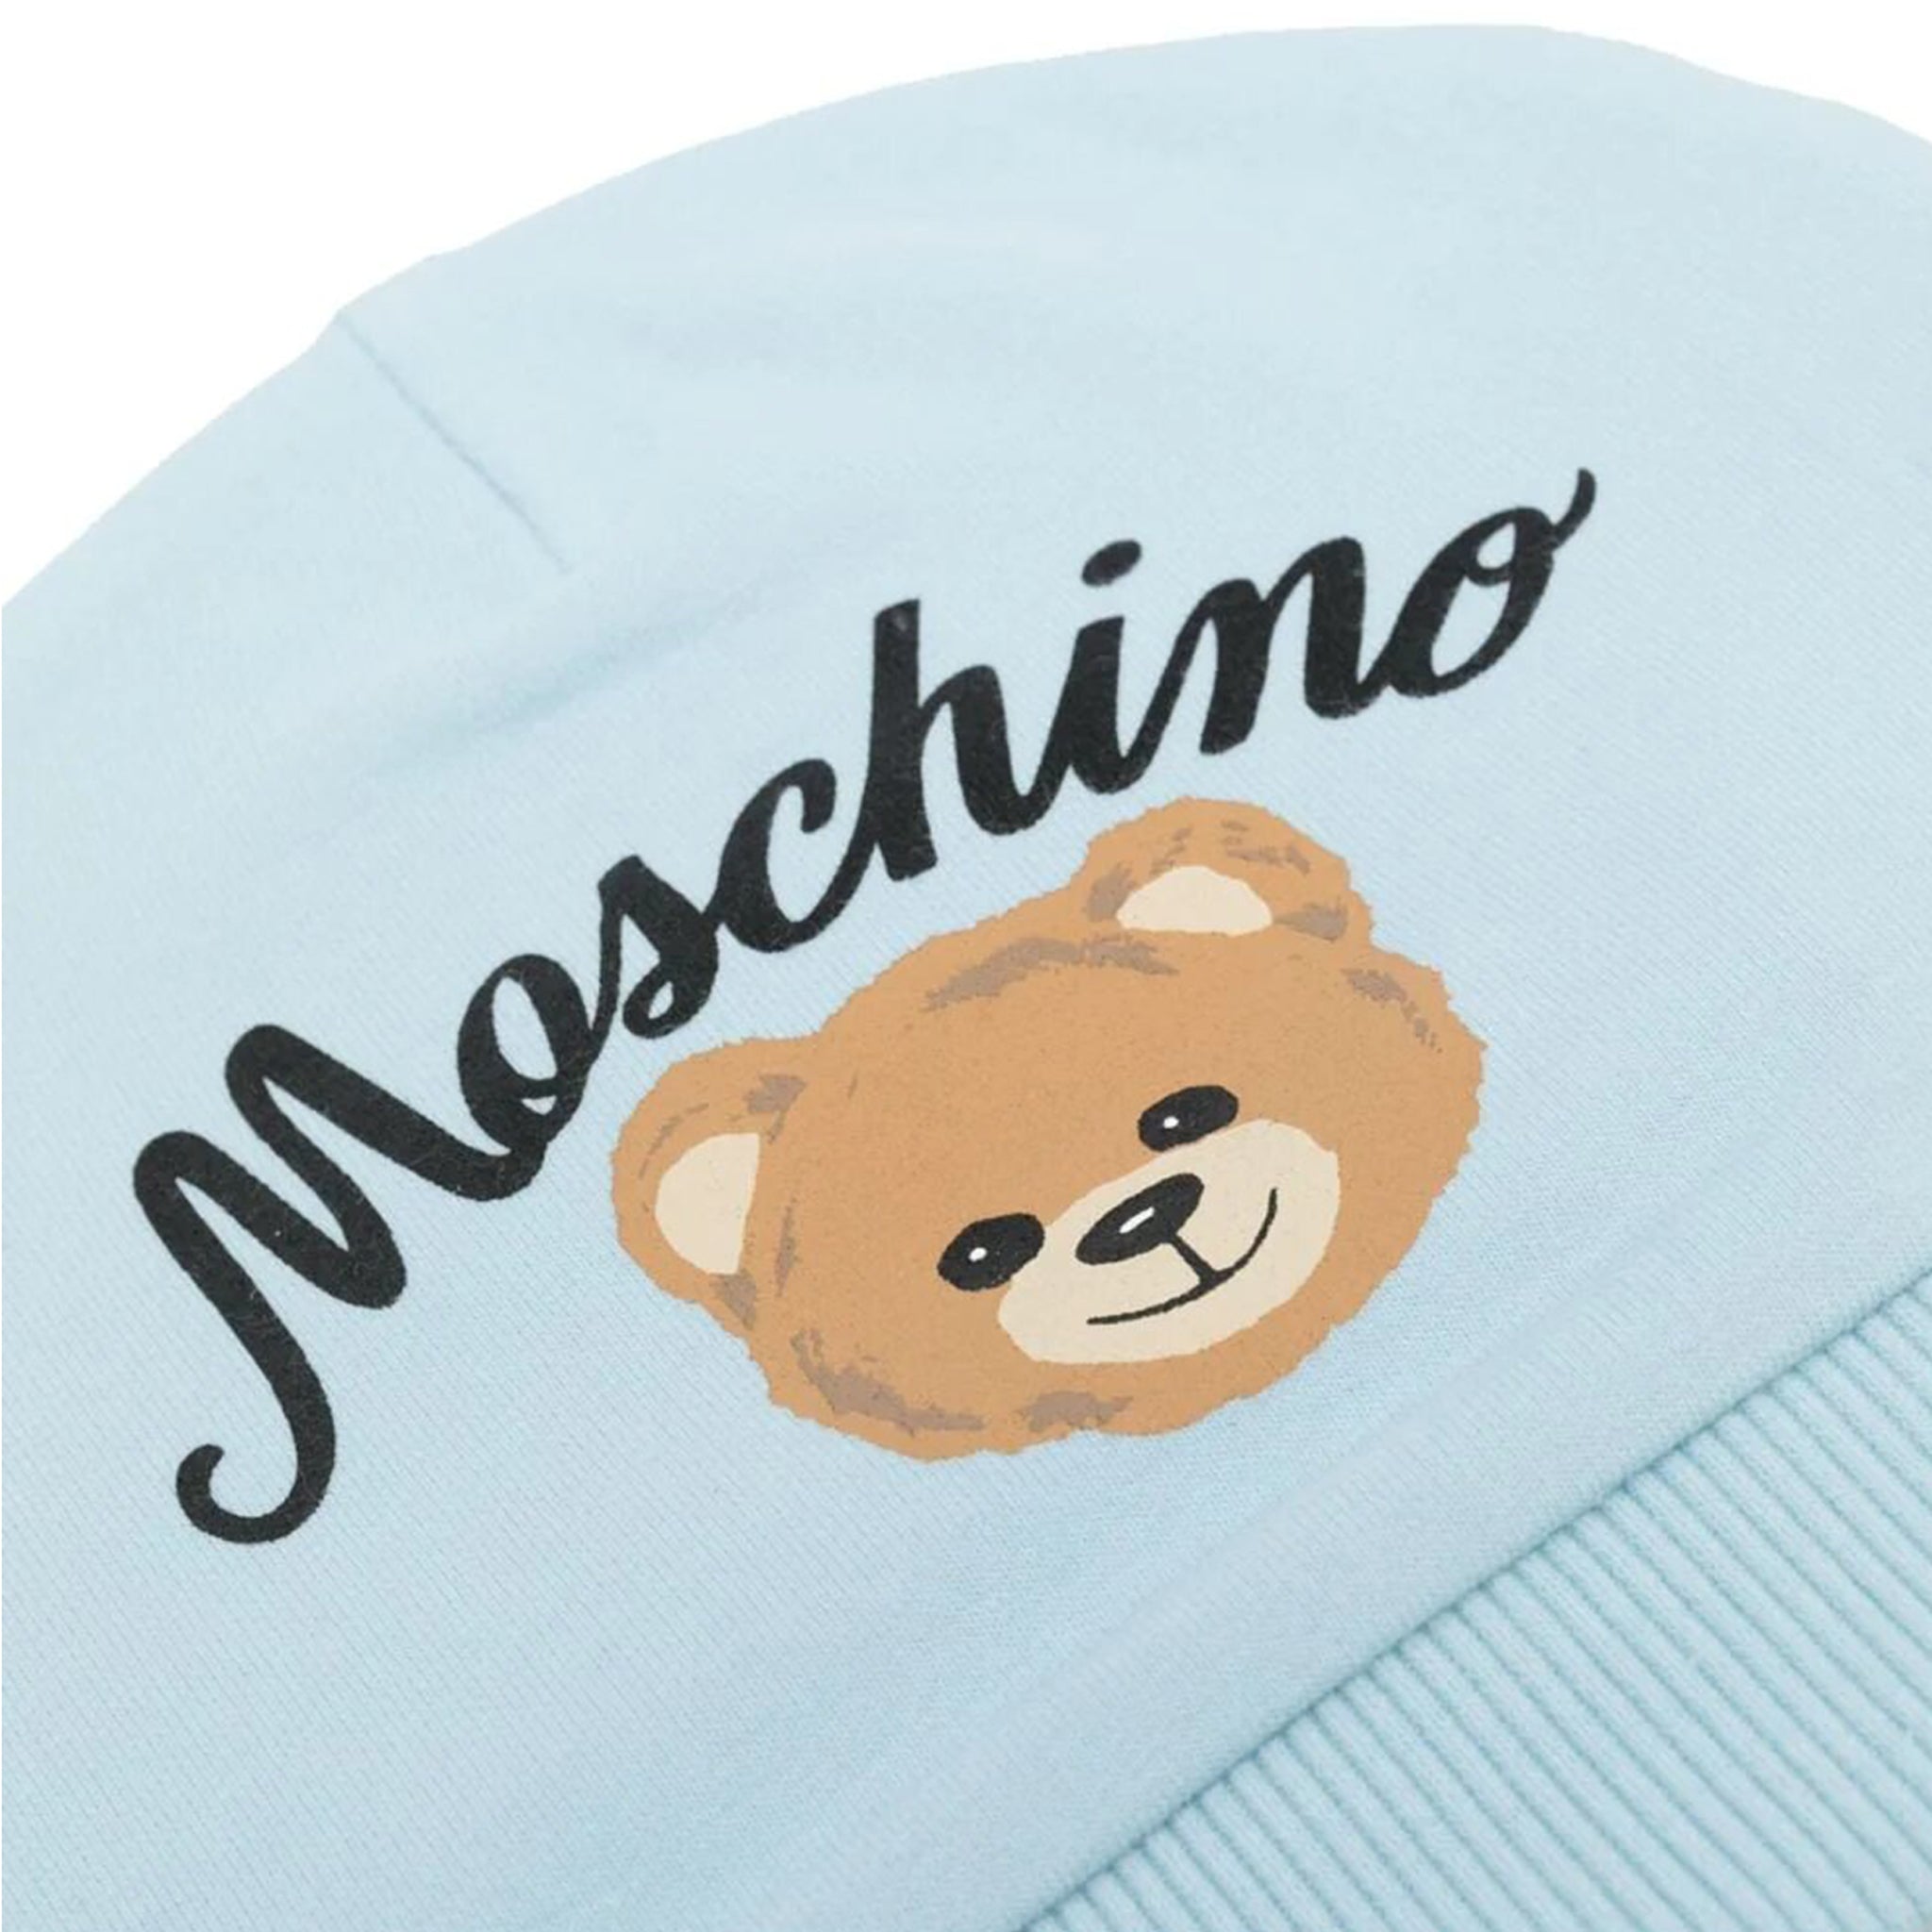 Moschino Baby Unisex Teddy Logo Hat in Blue